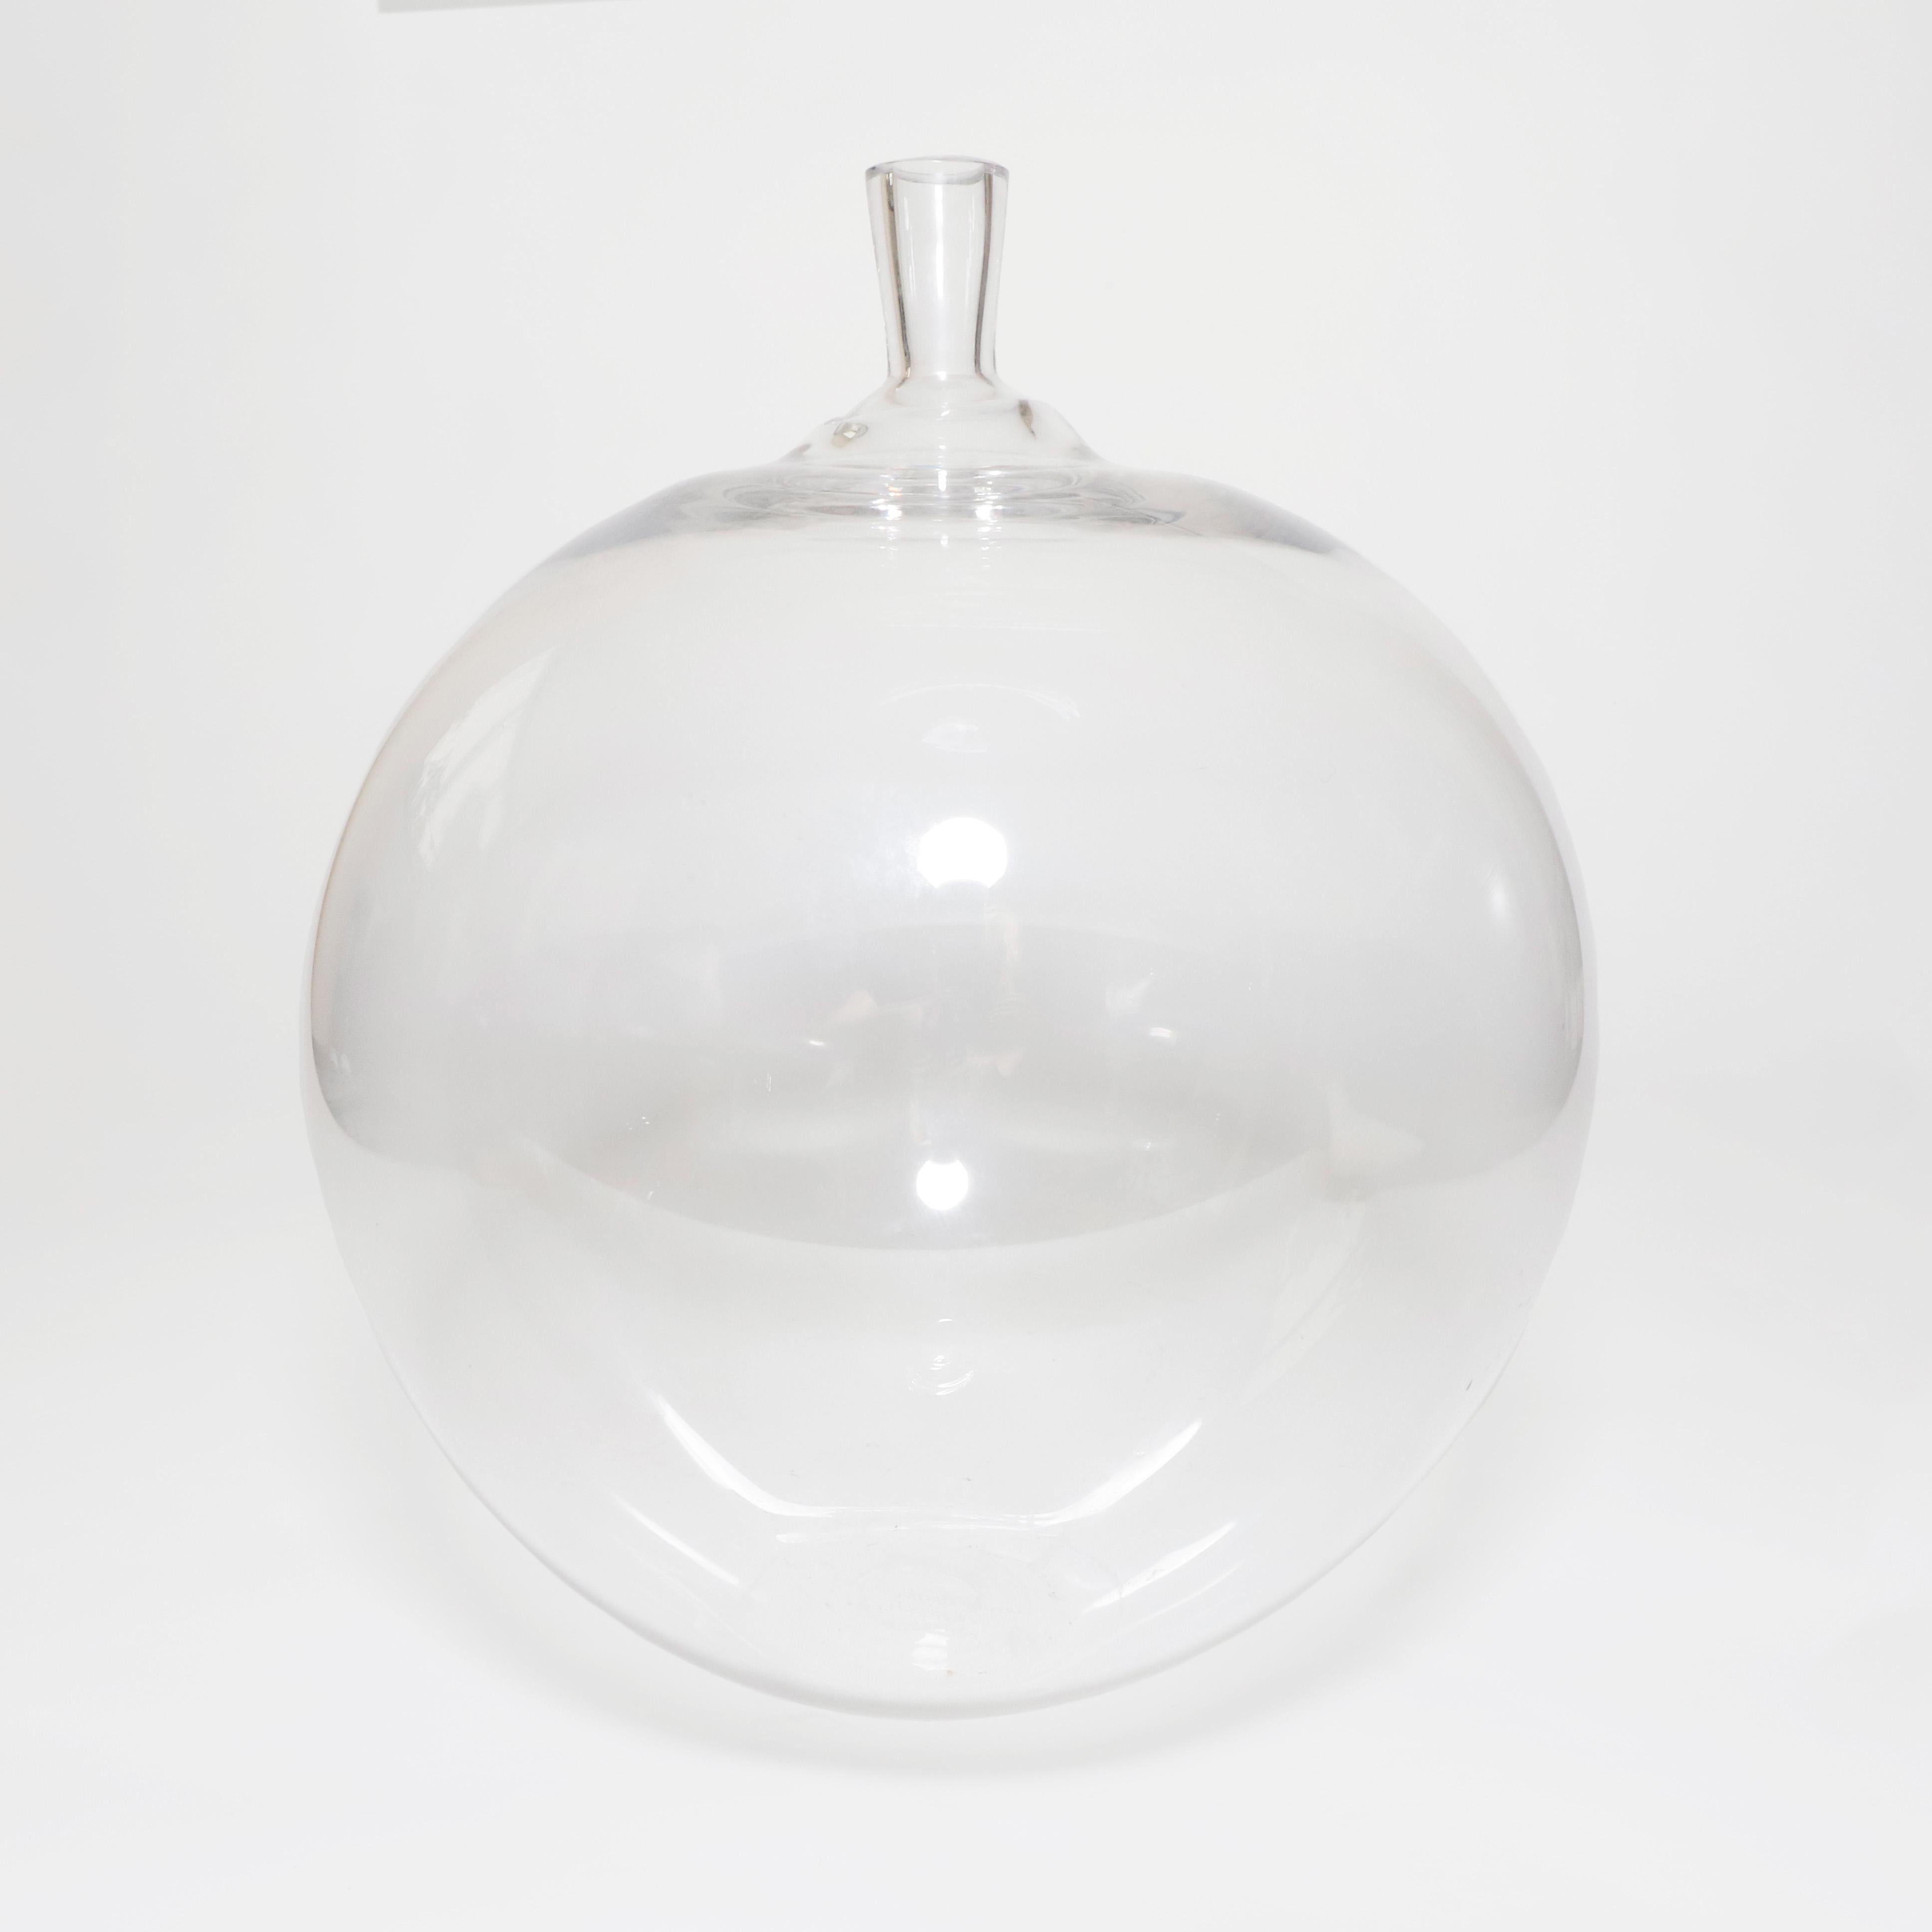 Handblown cleared glass vase for Orrefos by the Swedish designer Ingeborg Lundin titled 